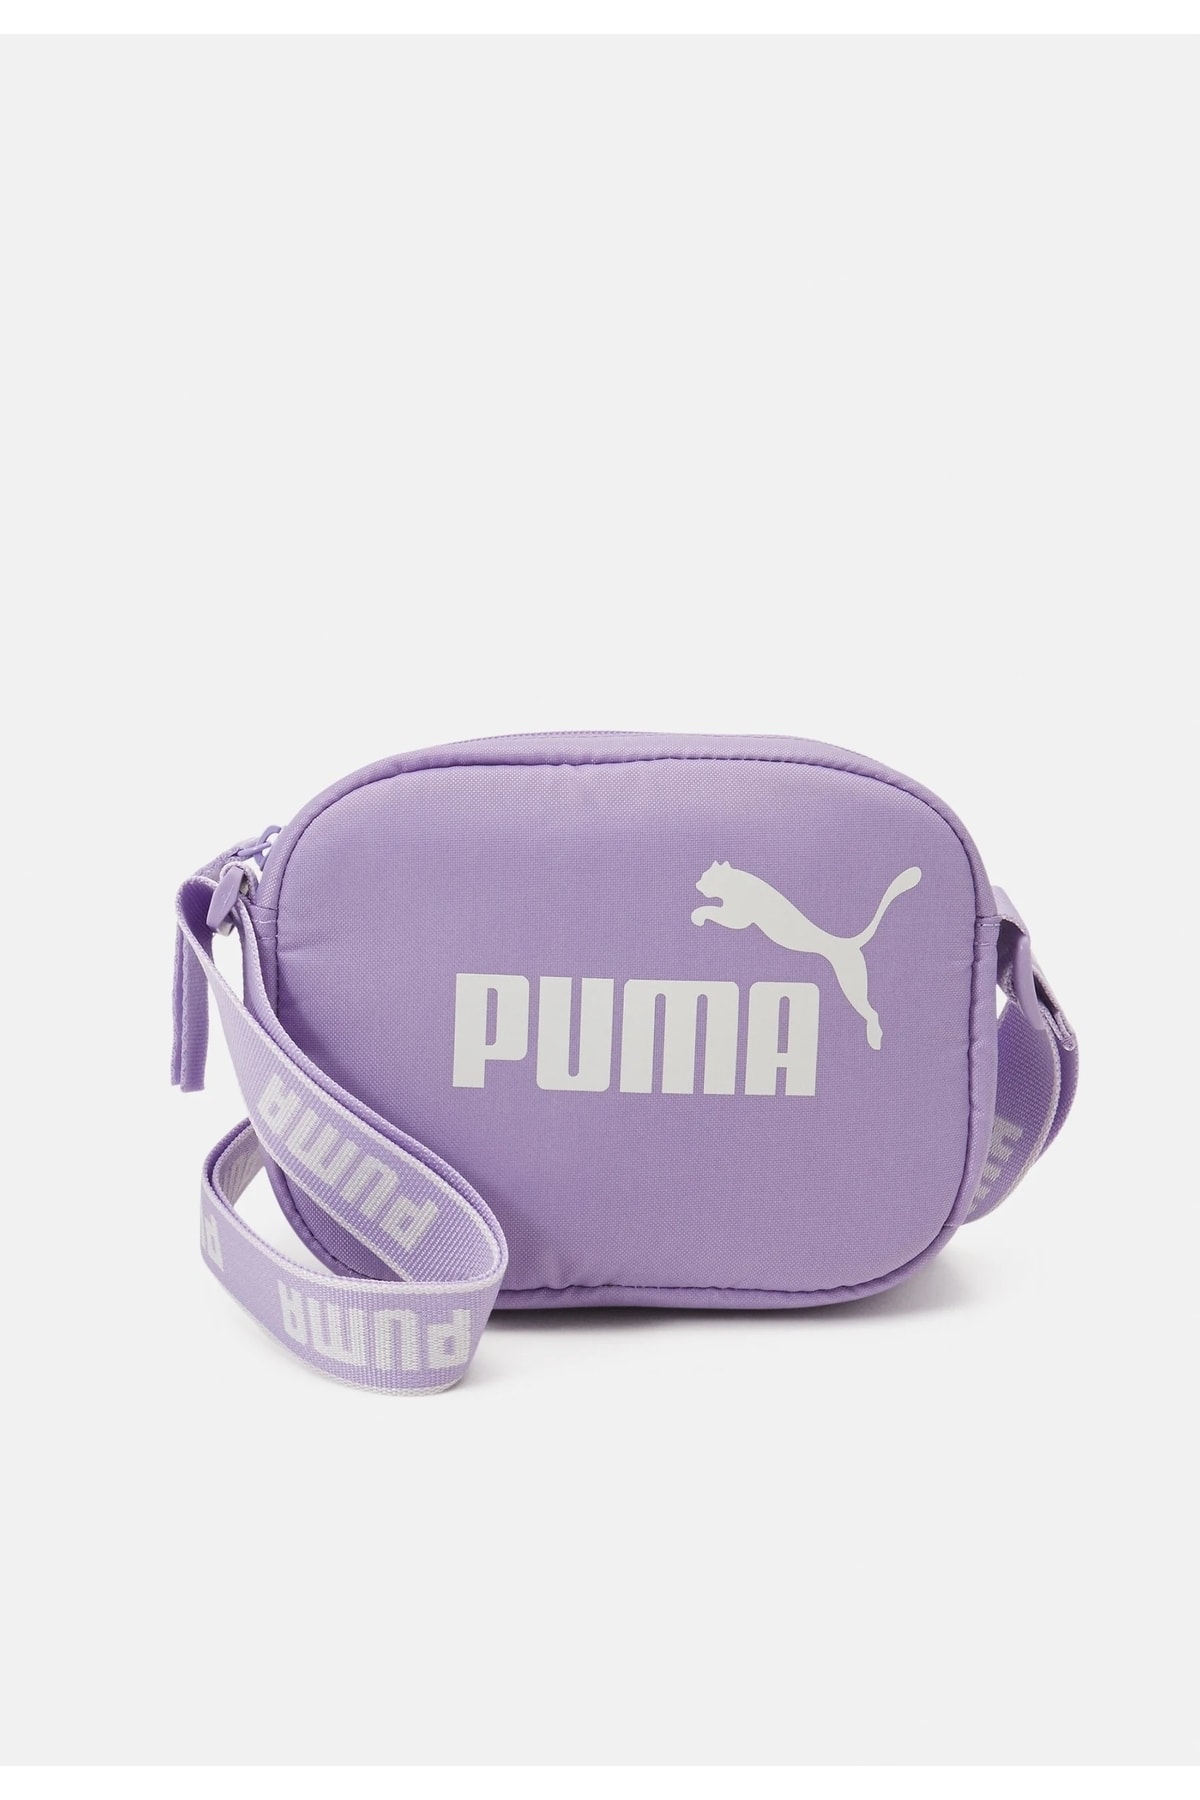 Puma Core Base Cross Body Bag Vivid Violet